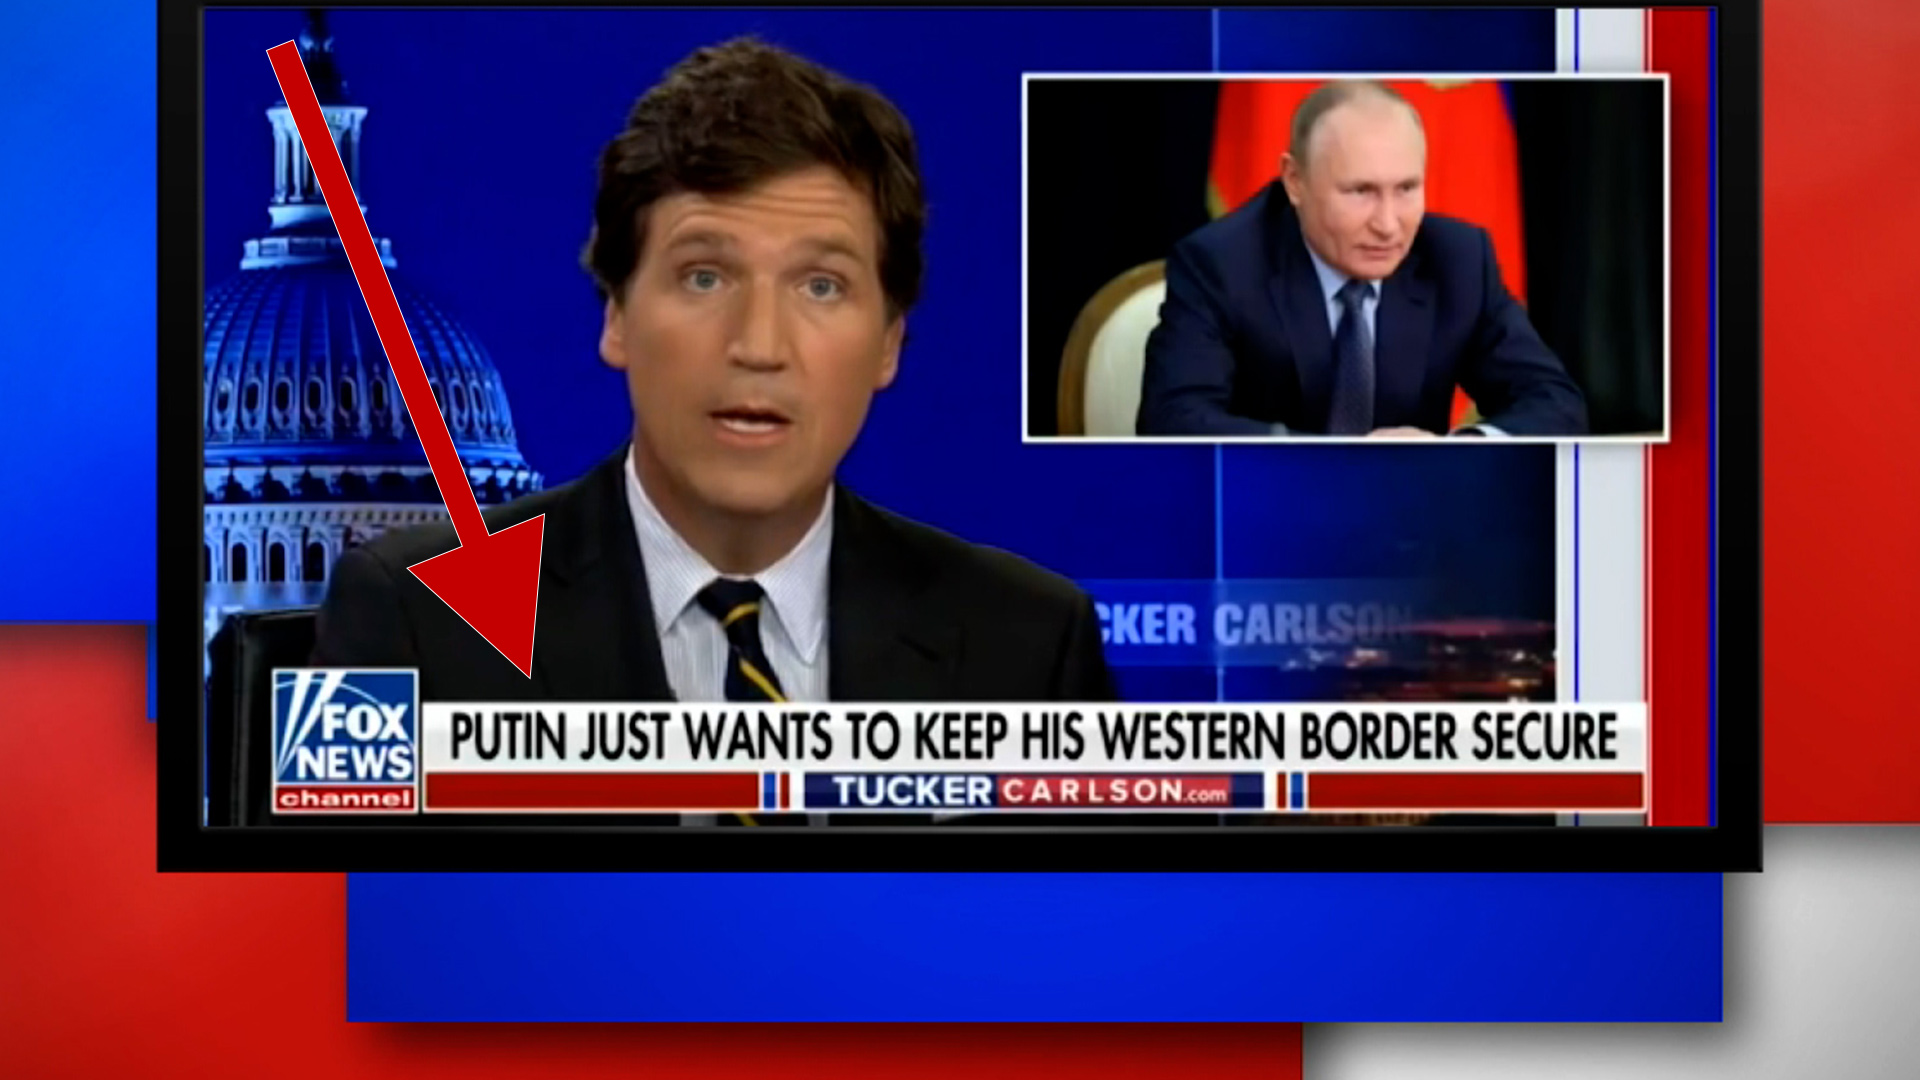 Fox News echo chamber fuels Russian propaganda - CNN Video